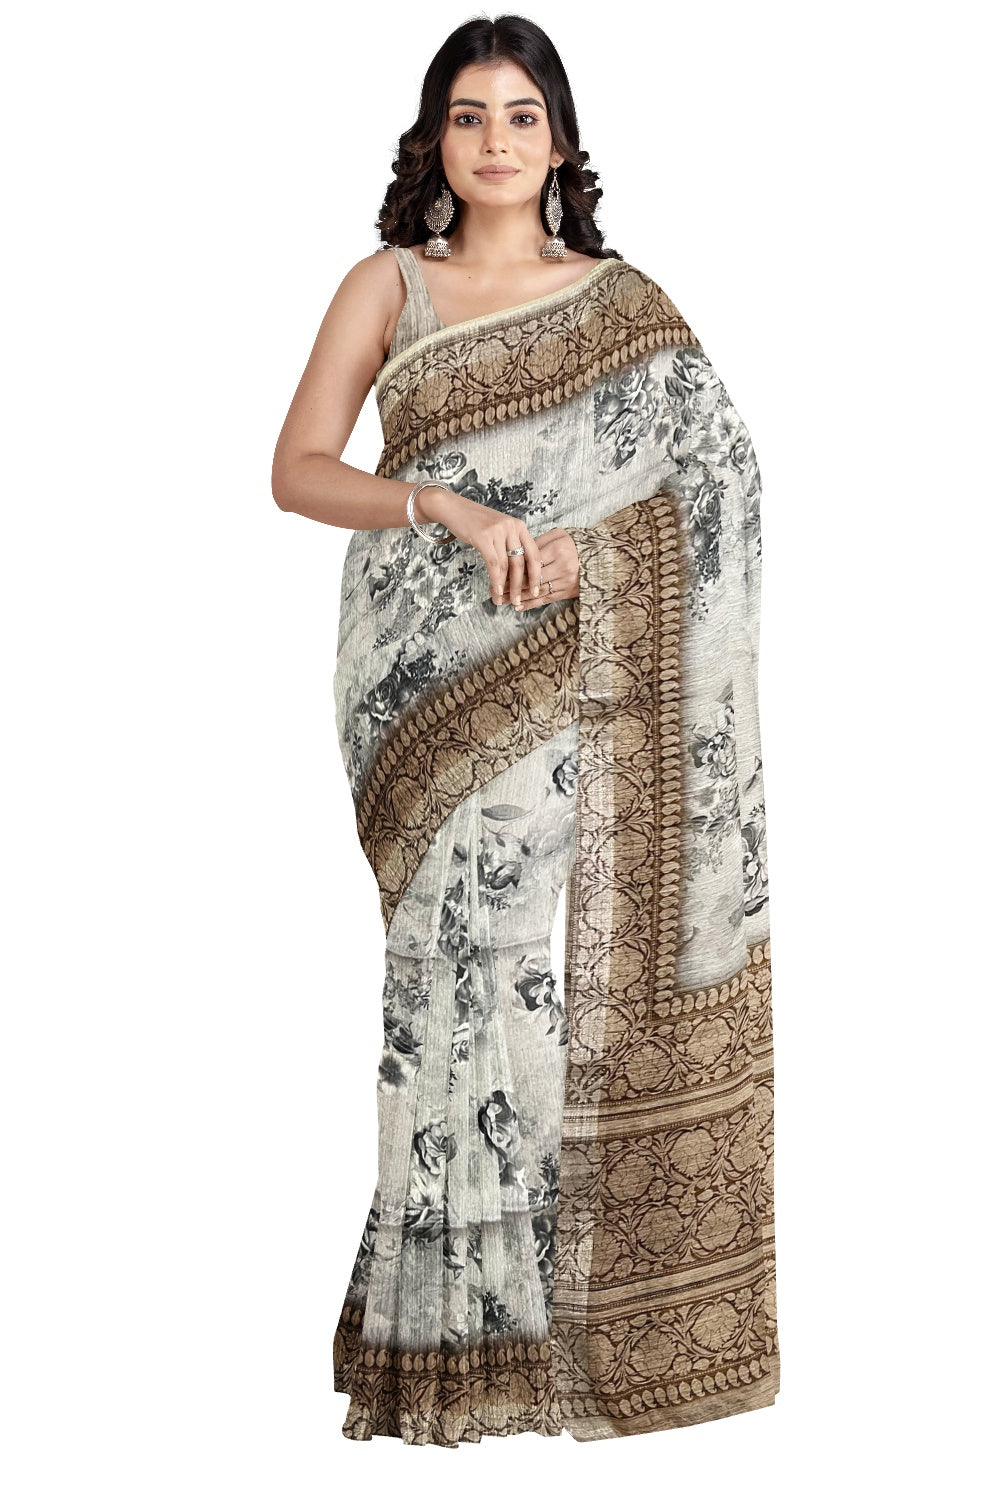 Southloom Art Silk Grey Floral Printed Designer Saree with Brown Pallu